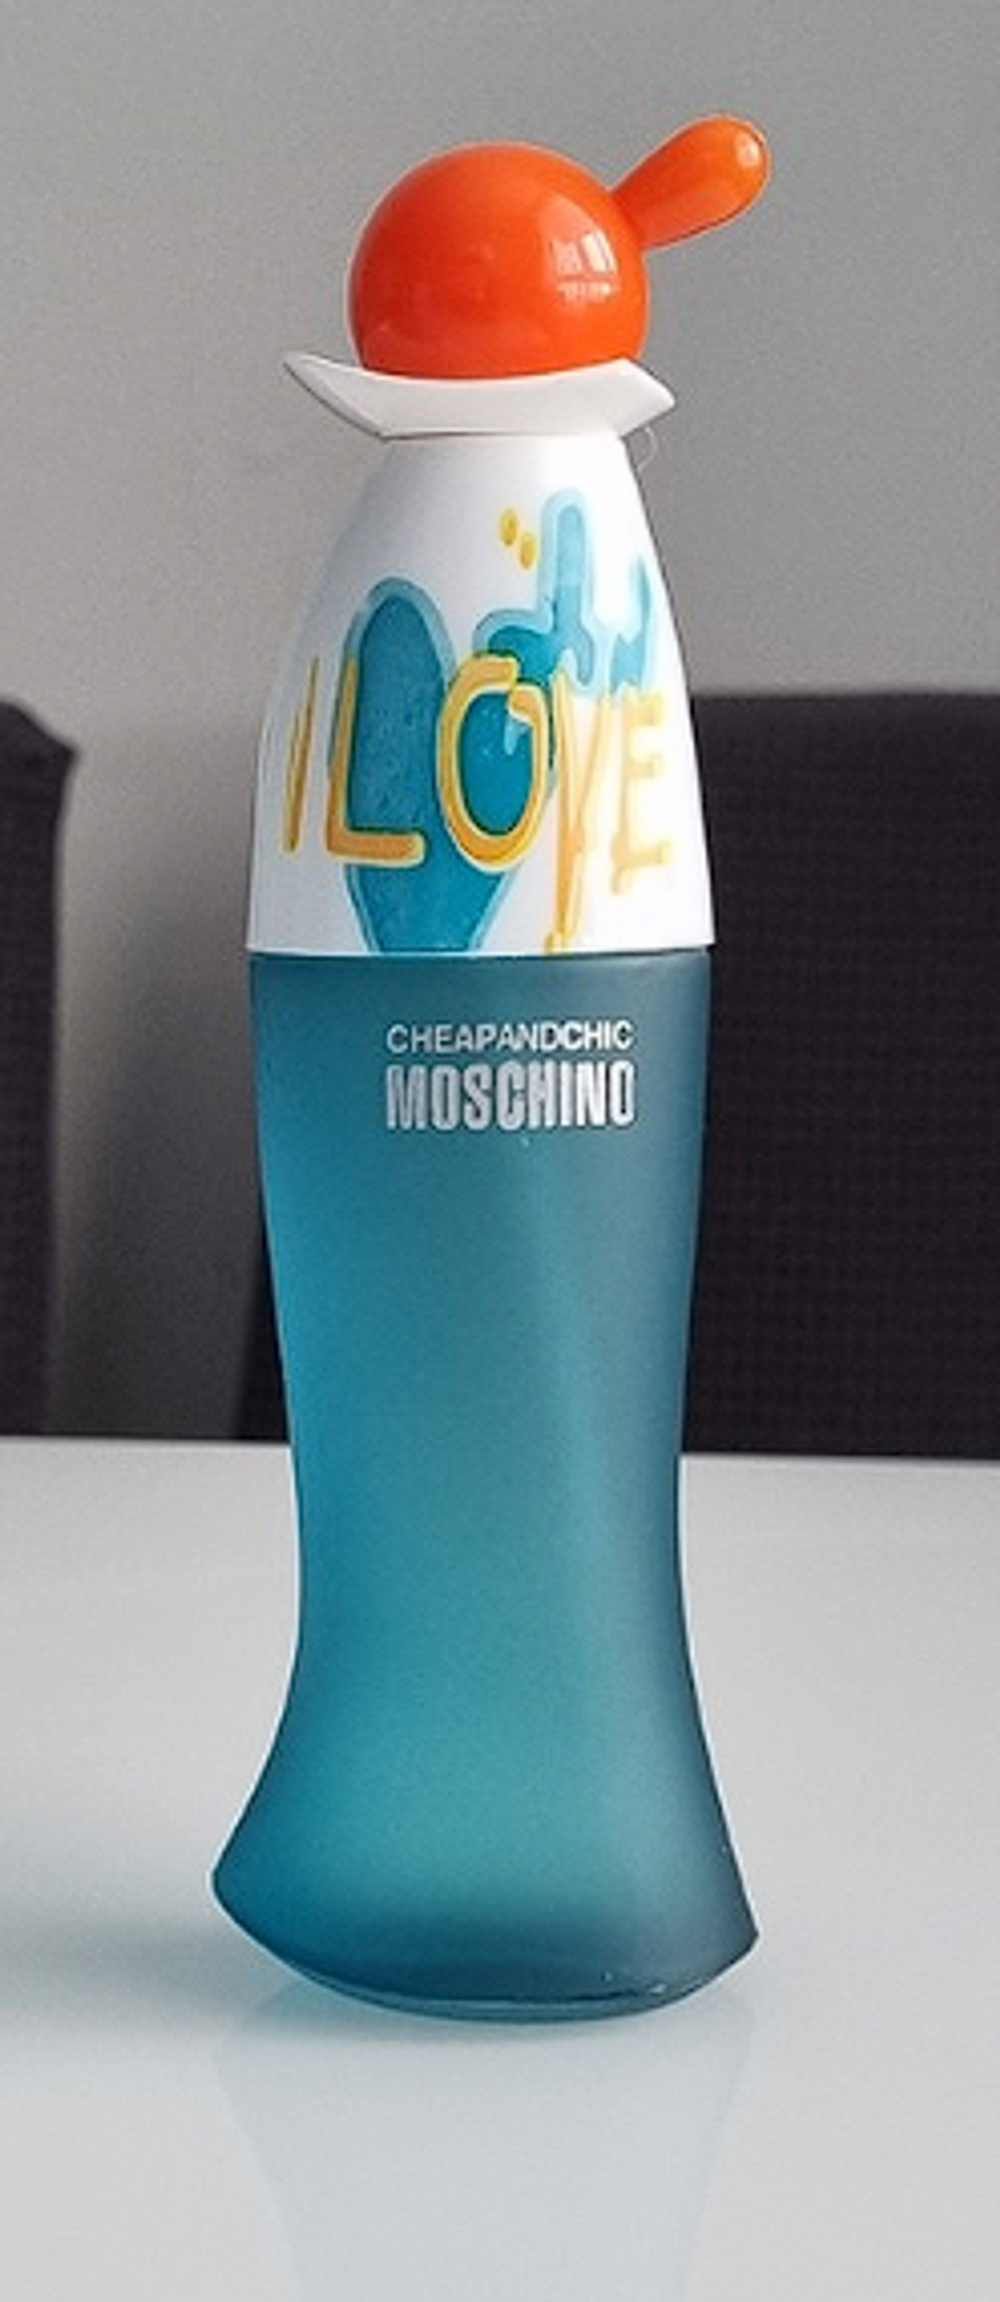 Moschino Cheap & Chic I Love Love (duty free парфюмерия)